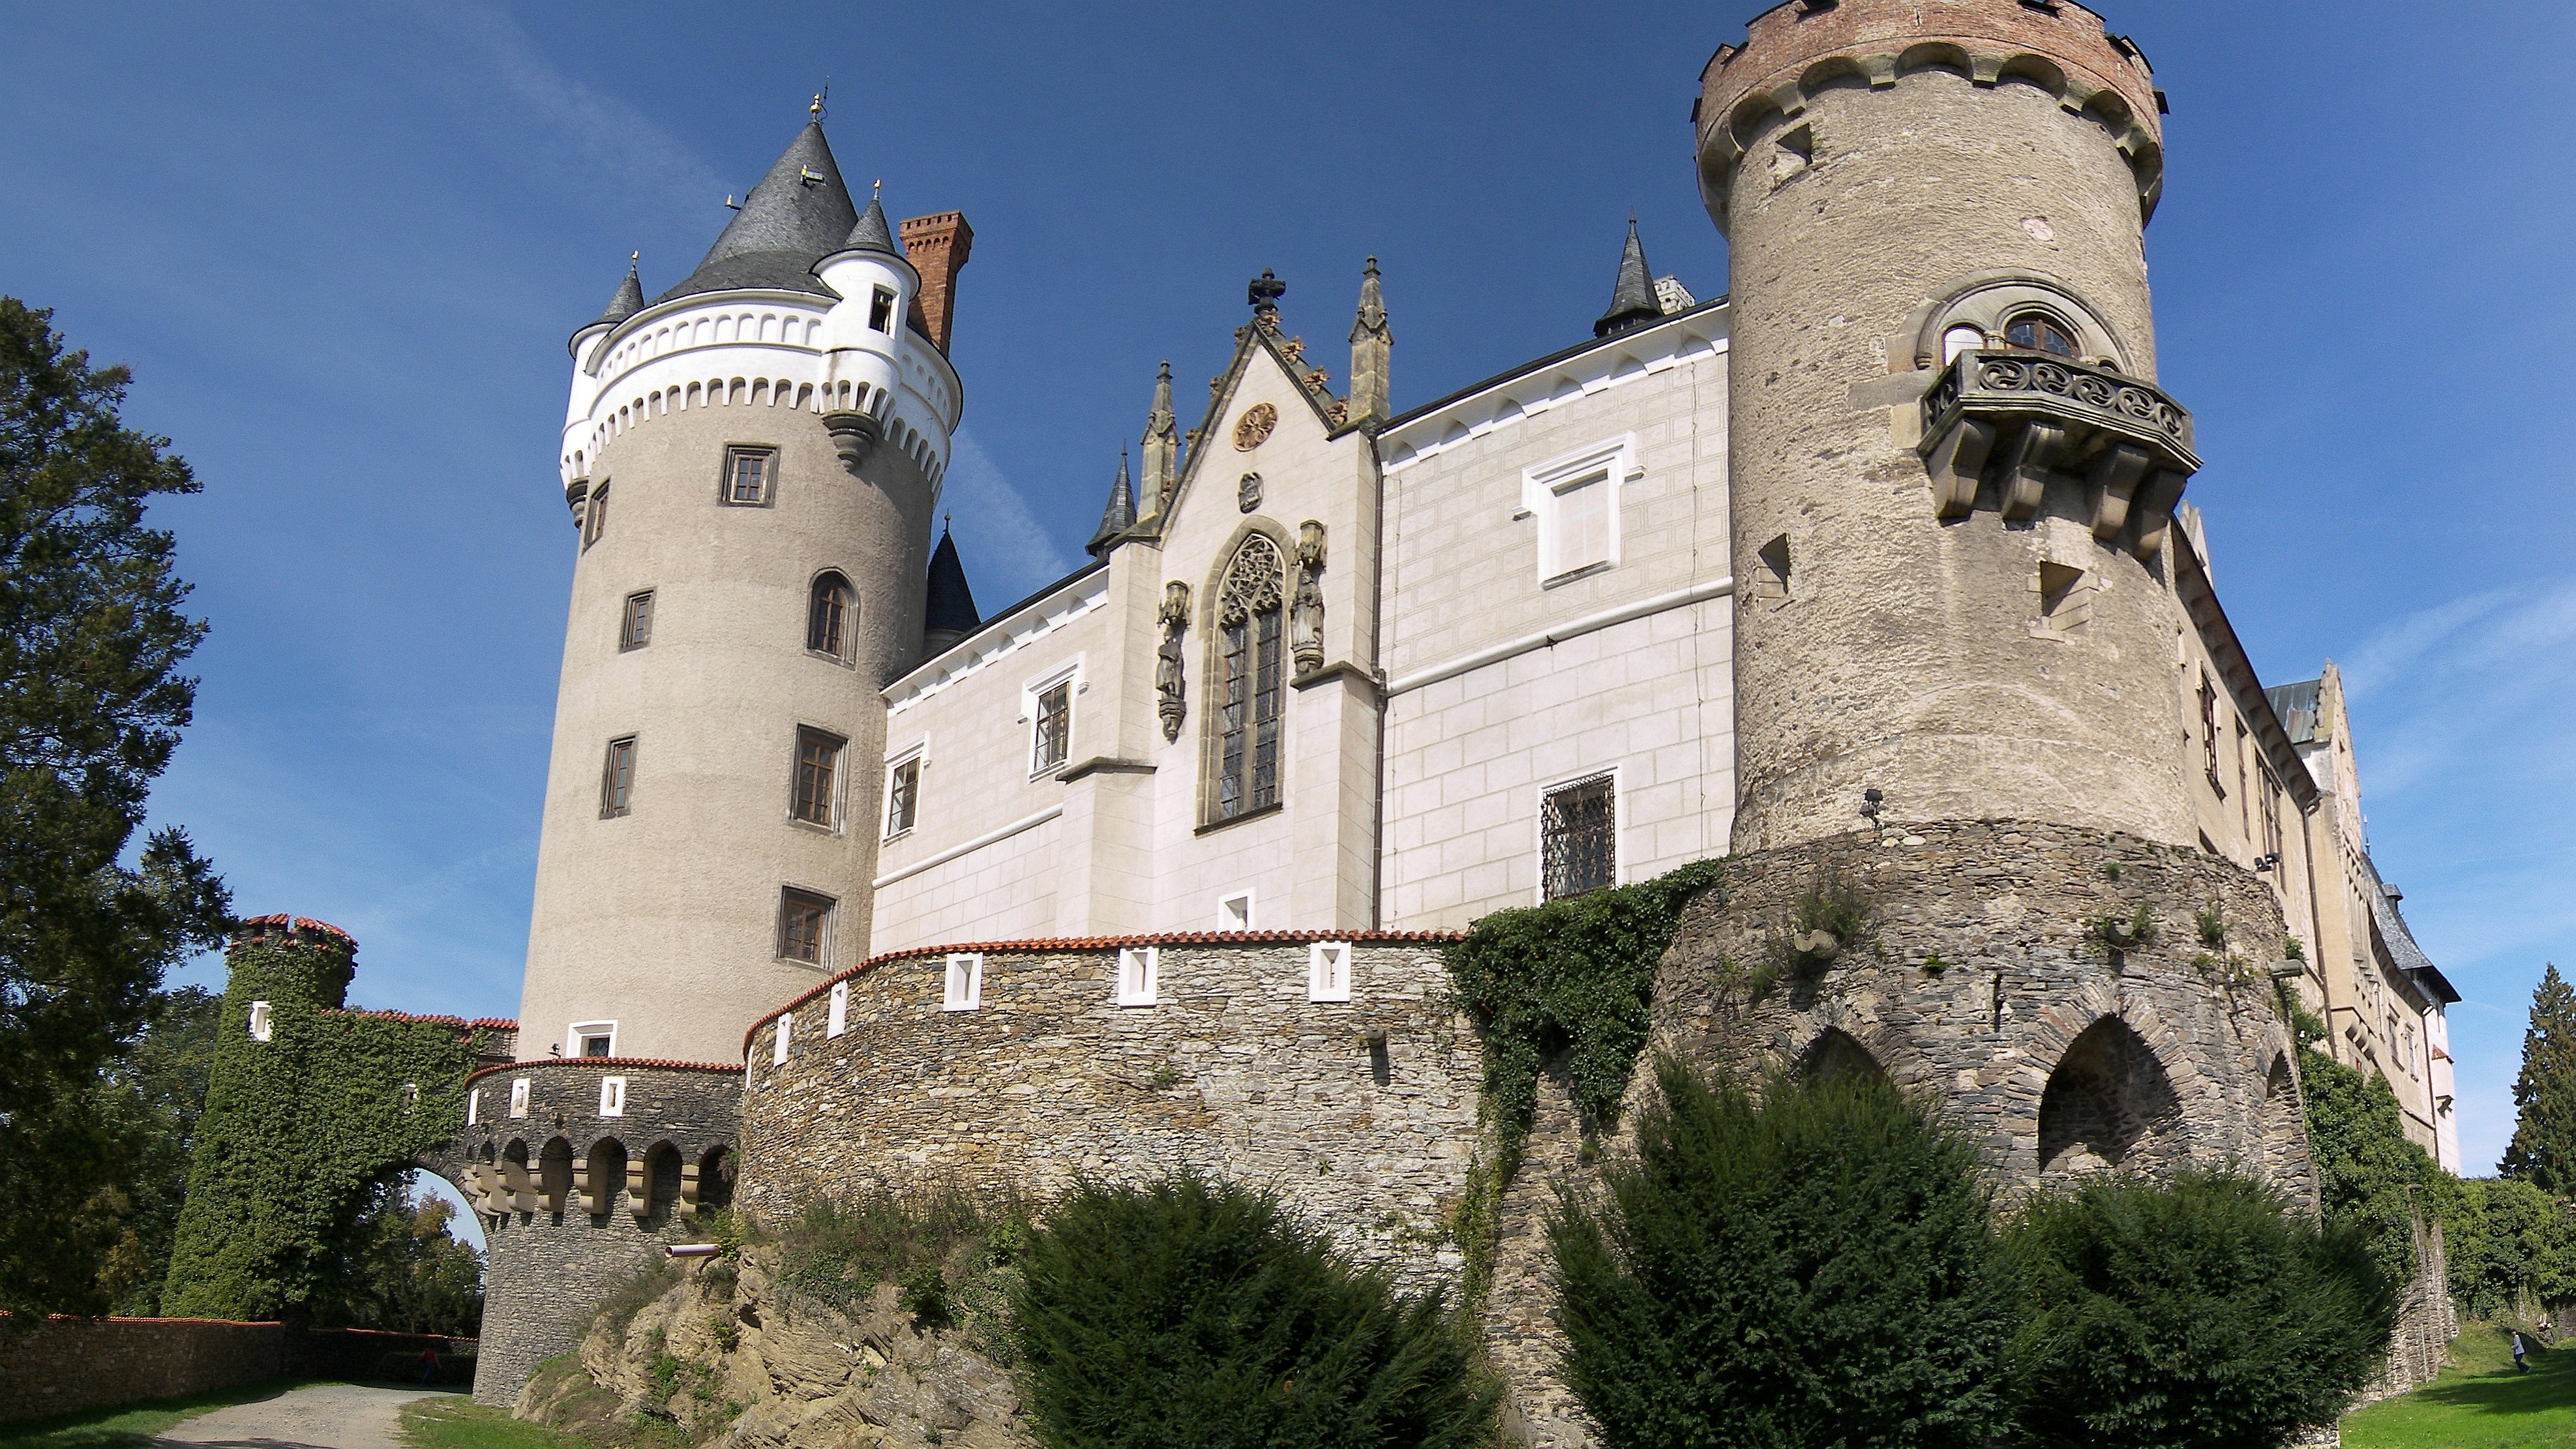 Замок v. Замок Жлебы Чехия. Замок Жлебы (Zleby Castle). Замок Кастл Чехия. Замок феодала Франция.